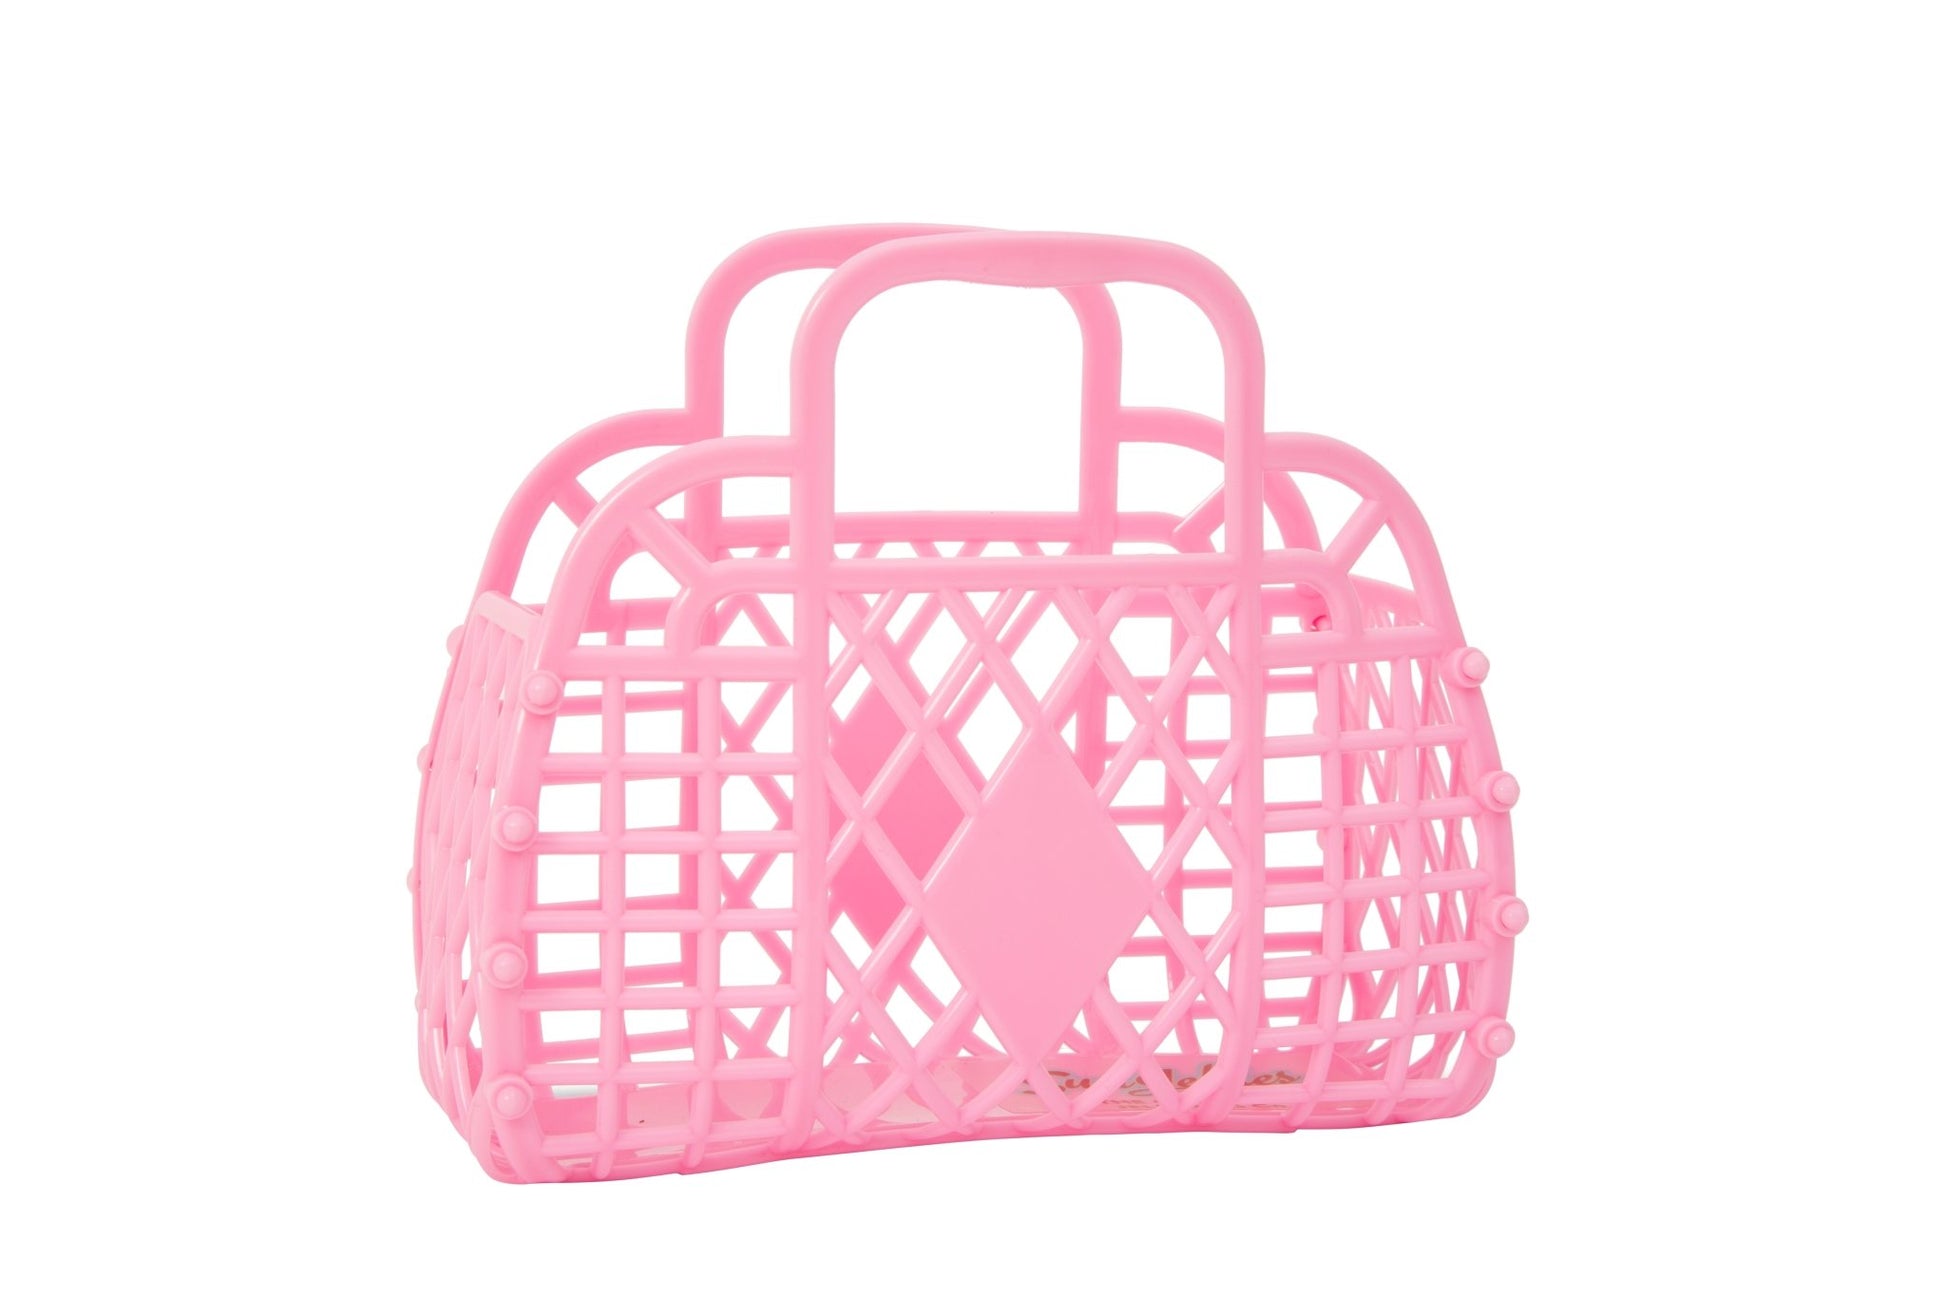 Retro Basket - Mini Bubblegum Pink - Rockamilly-Bags & Purses-Vintage